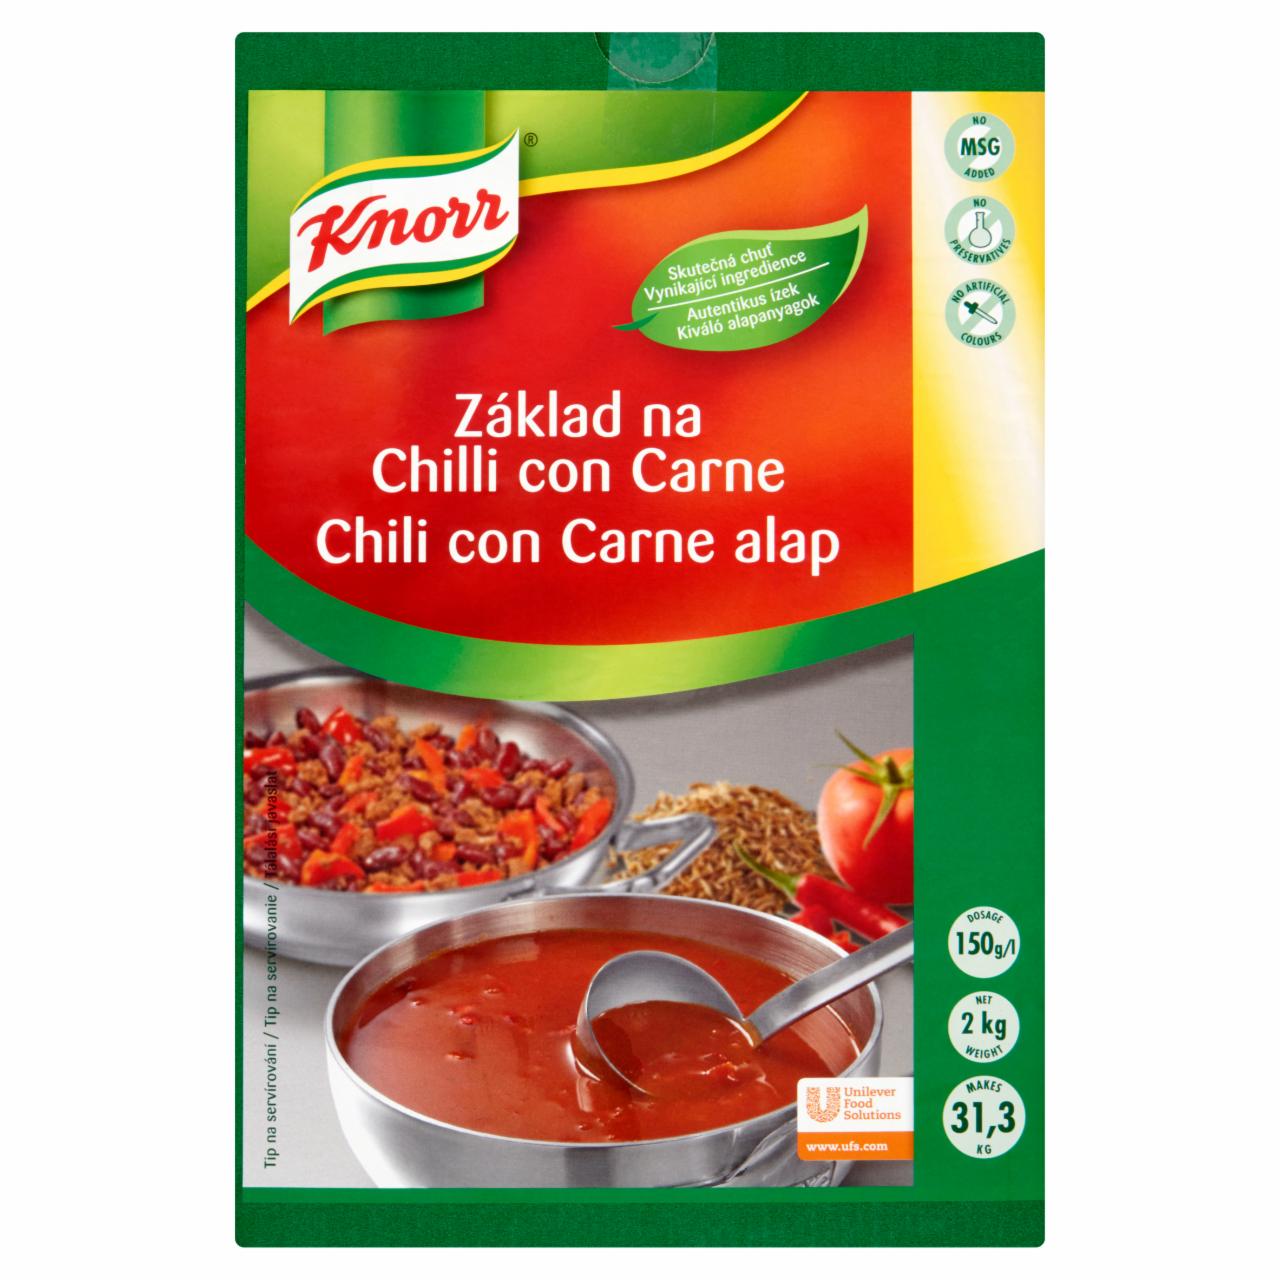 Képek - Knorr Chili con Carne alap 2 kg